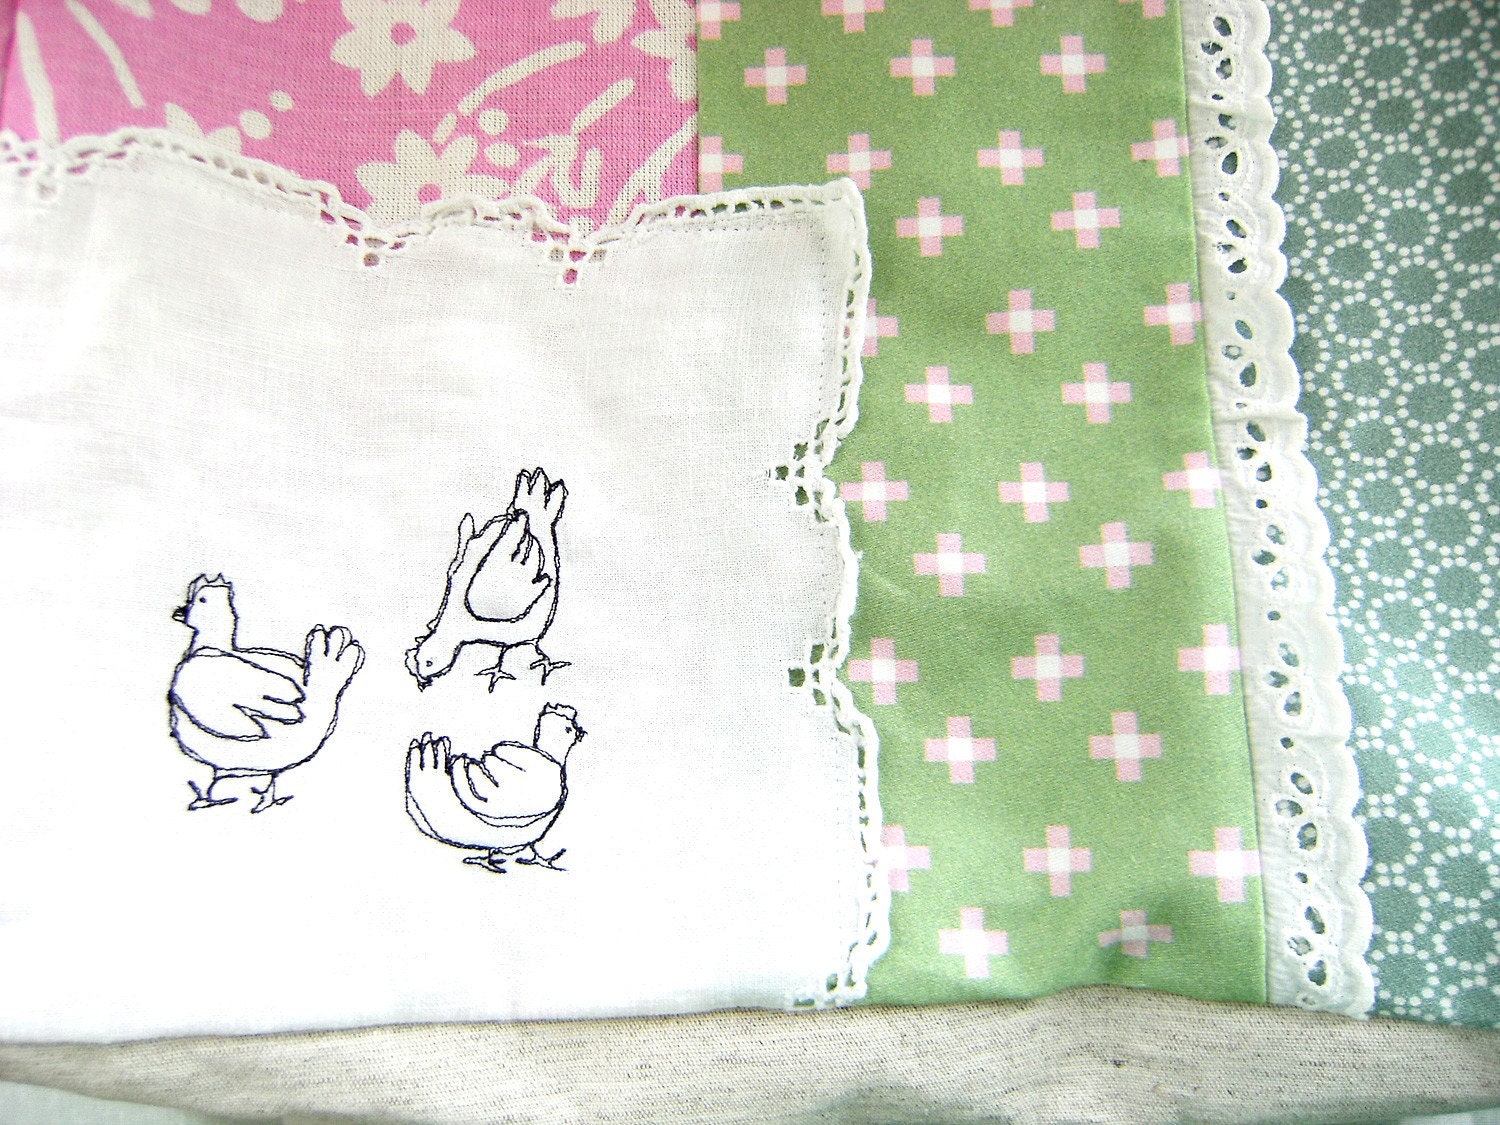 Embroidered Messenger Bag - 'La Basse-court' large patchwork bag in pink and green